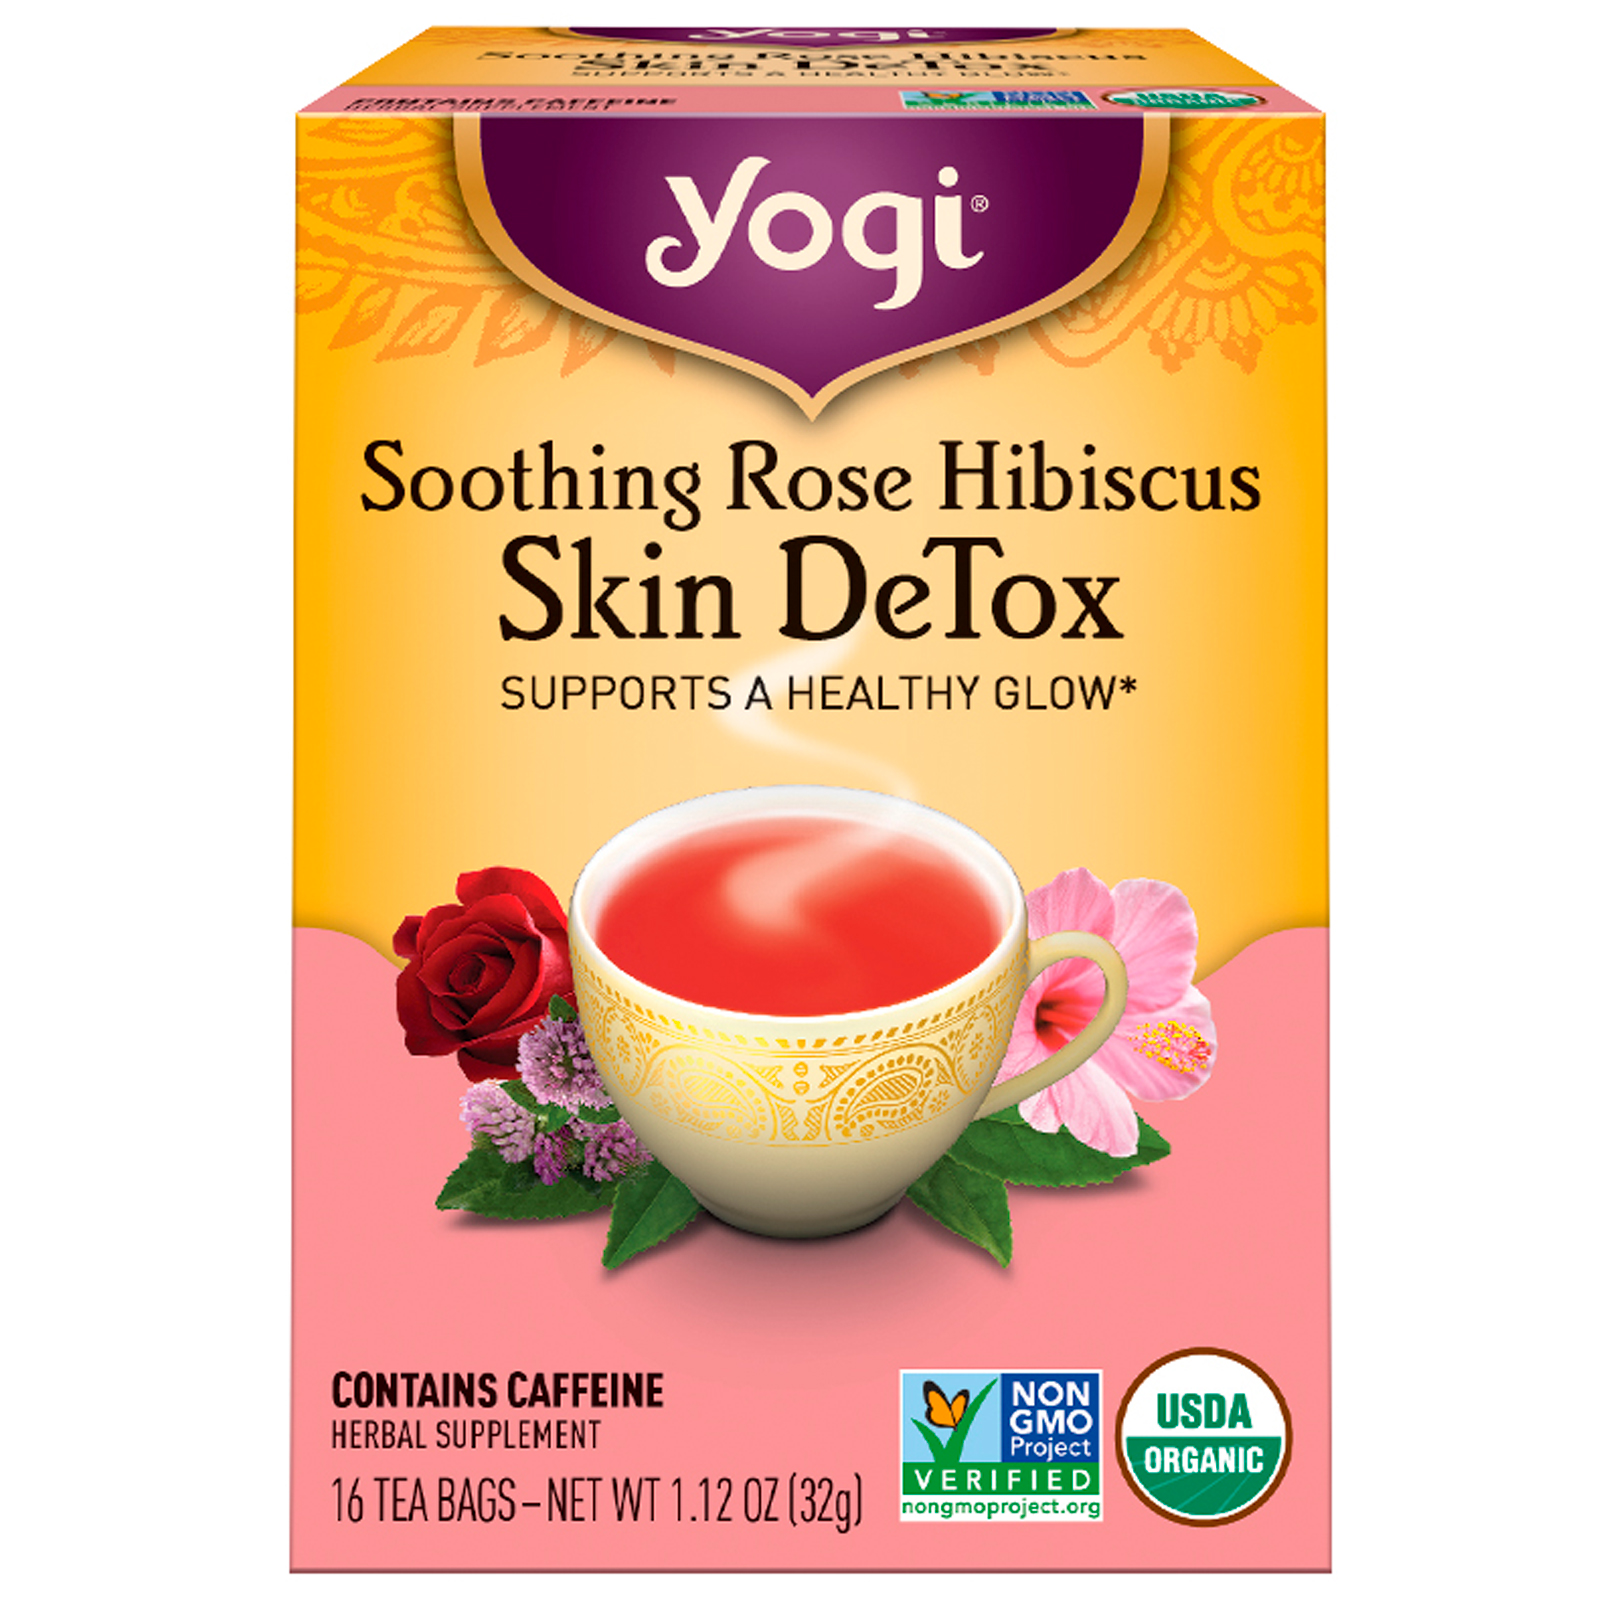 Yogi Tea, Skin DeTox, Soothing Rose Hibiscus, 16 Tea Bags, 1.12 oz ...